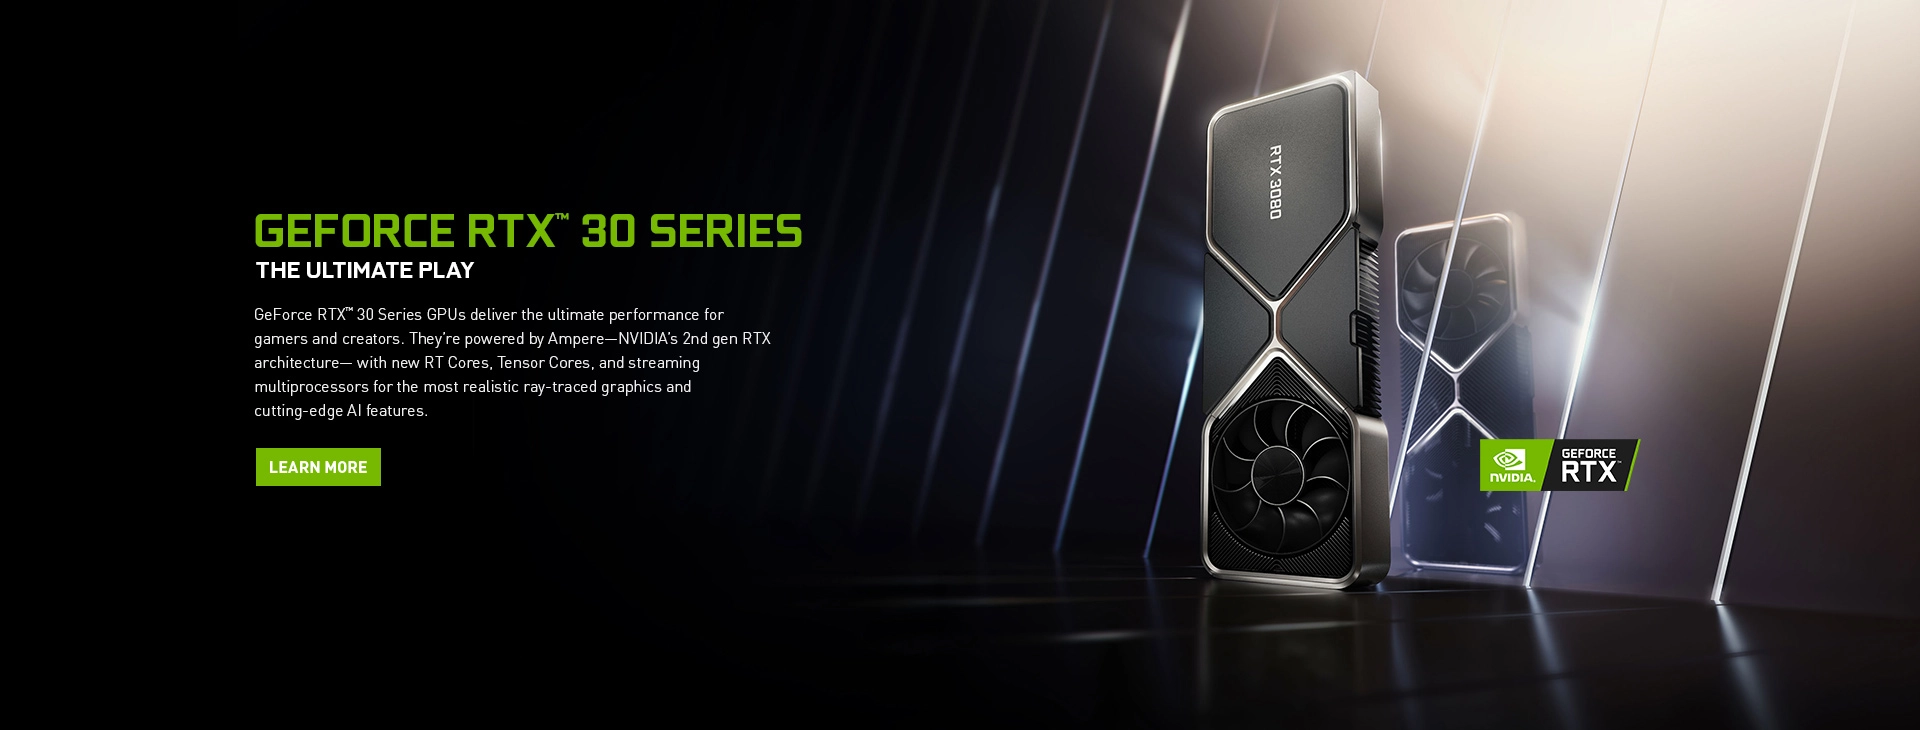 Nvidia-30Series-TV